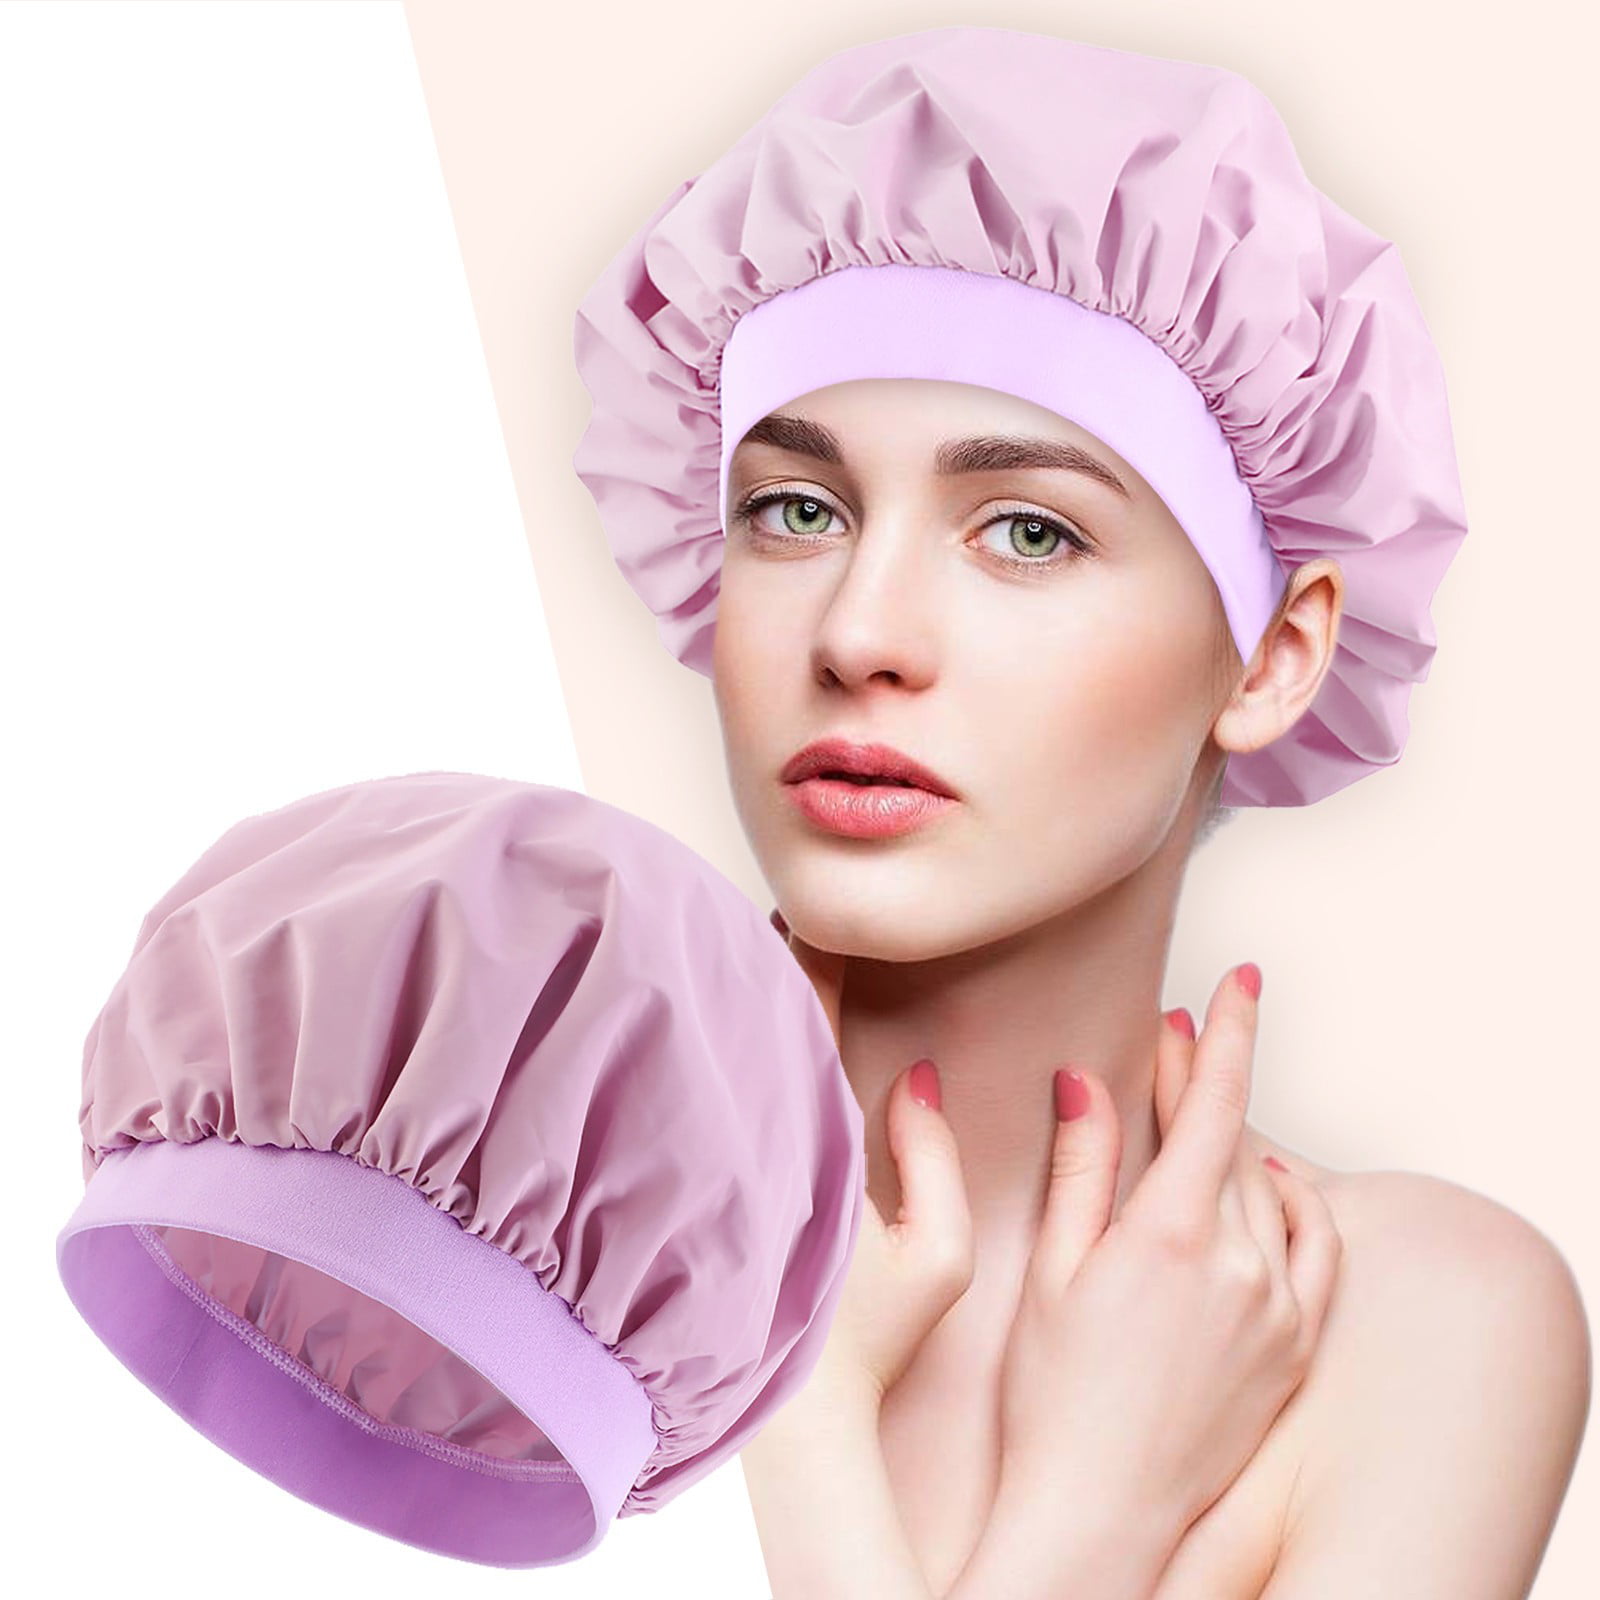 GHJUU Double layer Shower Cap Dot Printed Water Resistant Elastic Bath Cap for Women Shower Spa Salon,Beige 